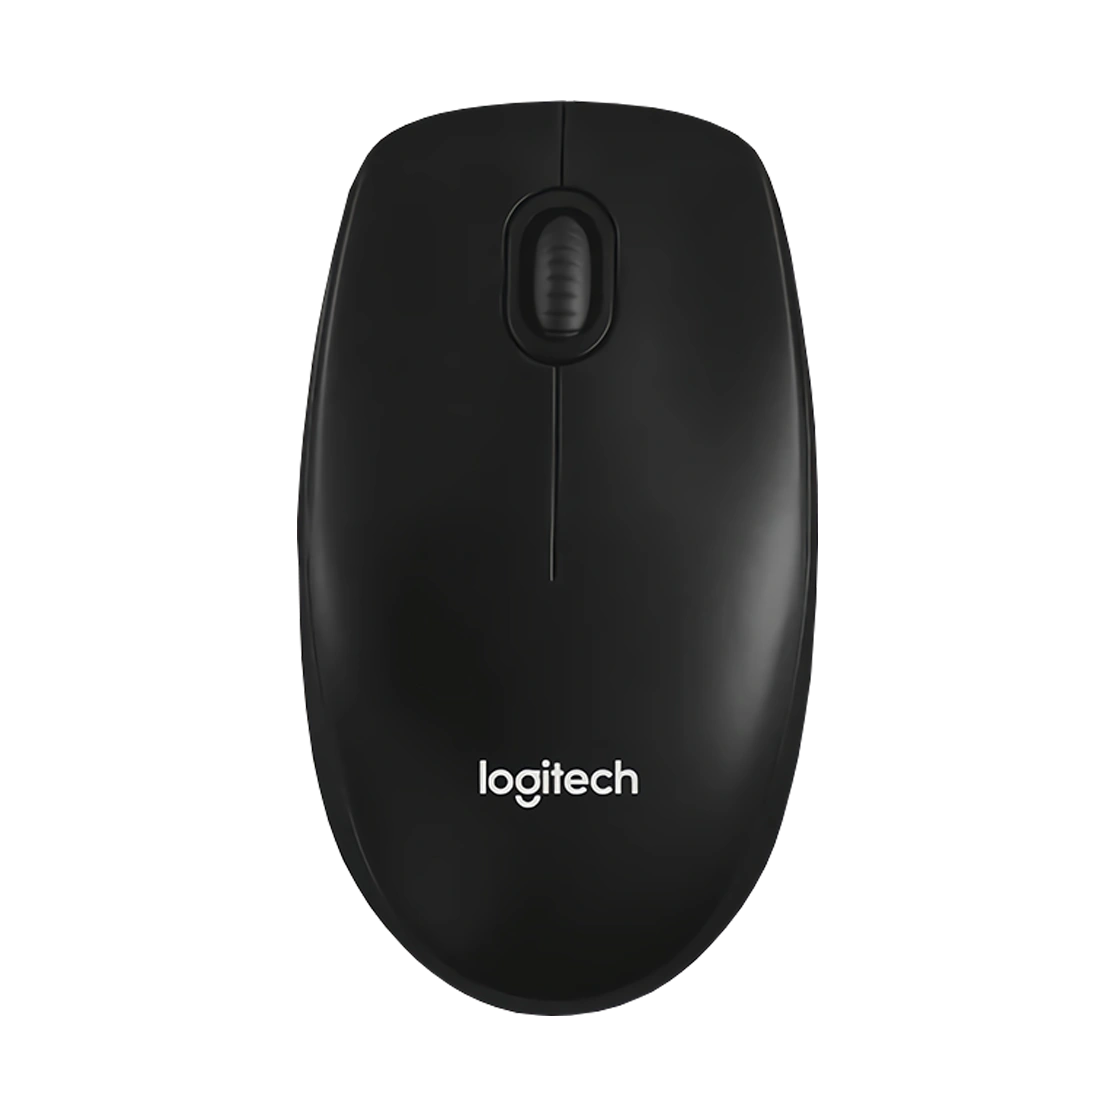 Logitech Optical USB Mouse M100